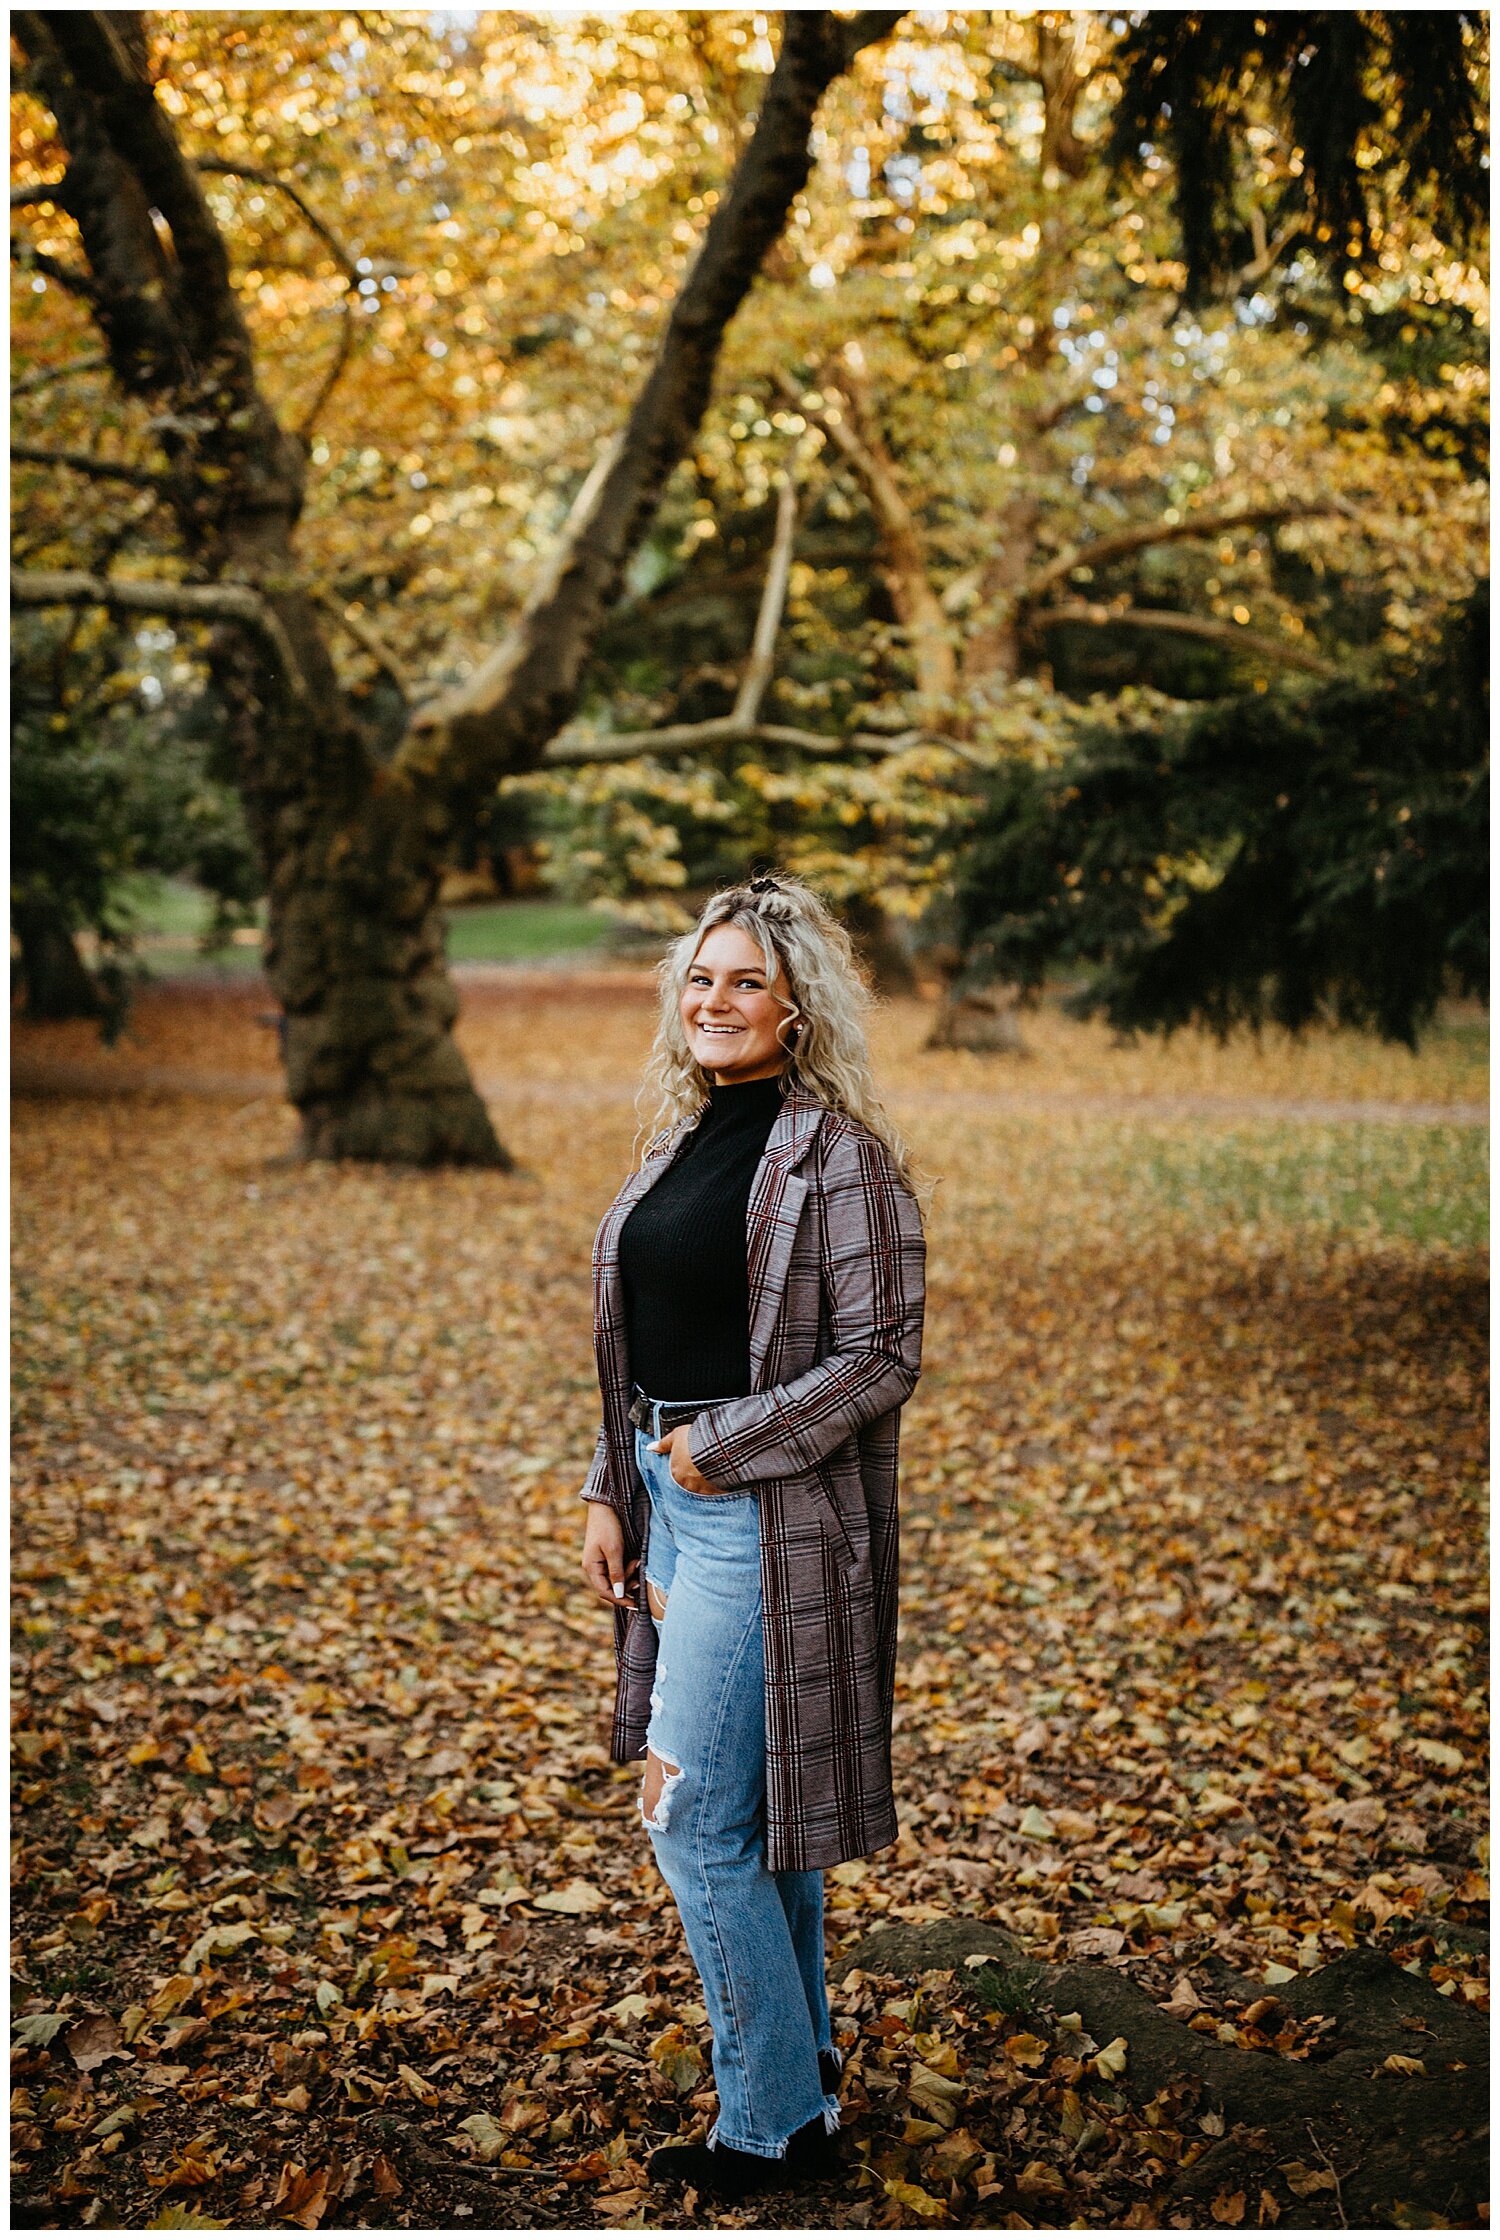  Where can I take senior portraits? Laurelhurst Park for amazing fall colors! 